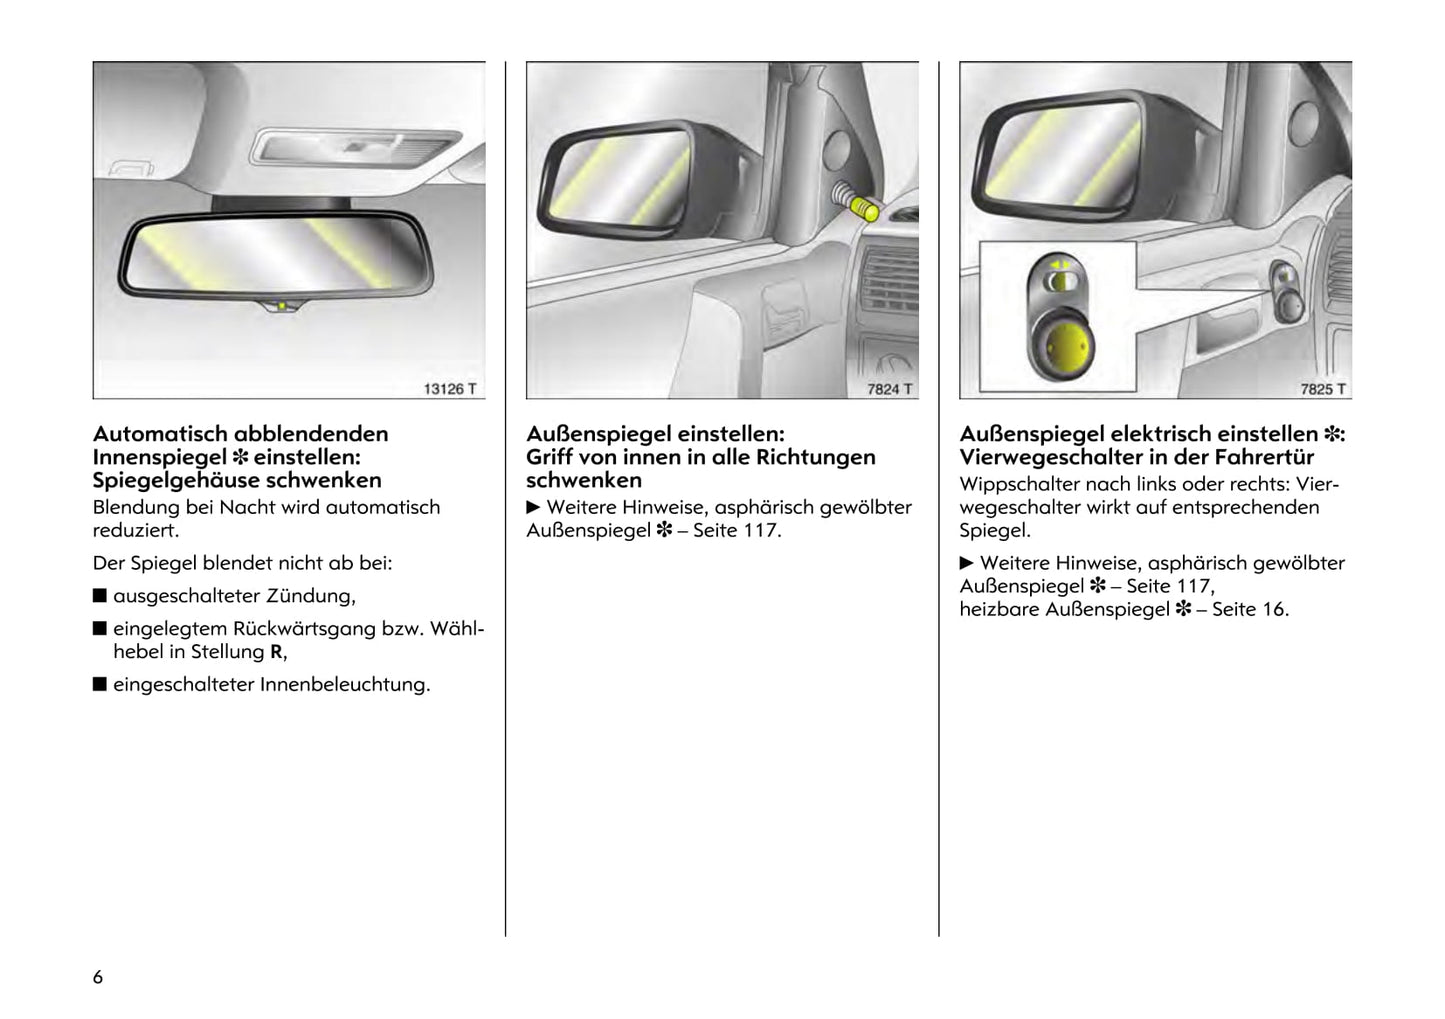 2000-2005 Opel Astra Owner's Manual | German